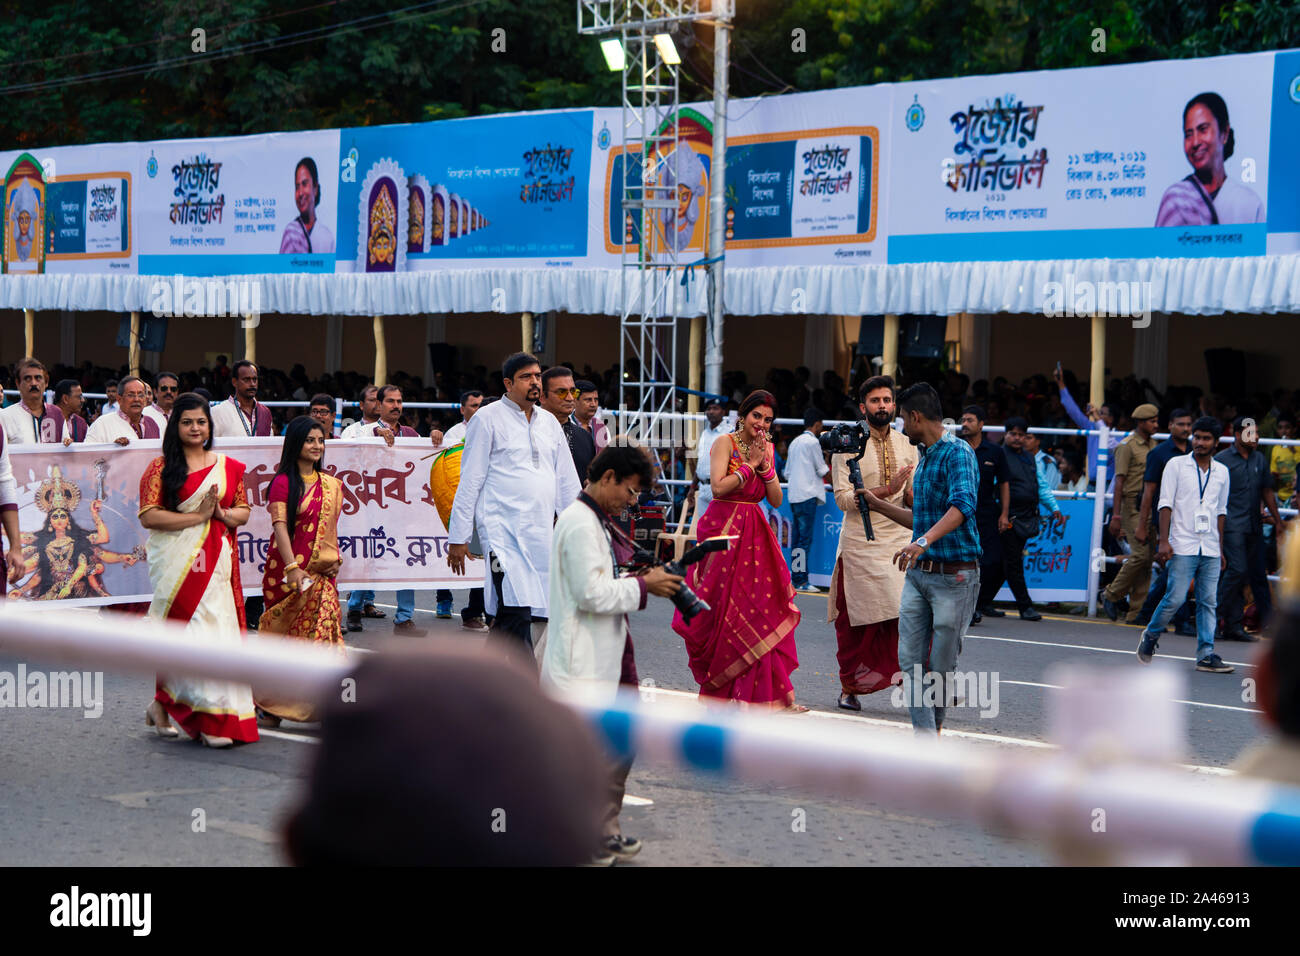 Celebrities like Nusrat Jahan, Nikhil Jain, Abhijeet bhattacharya, sujit bose are marching or walking though red road at puja carnival in Kolkata orga Stock Photo